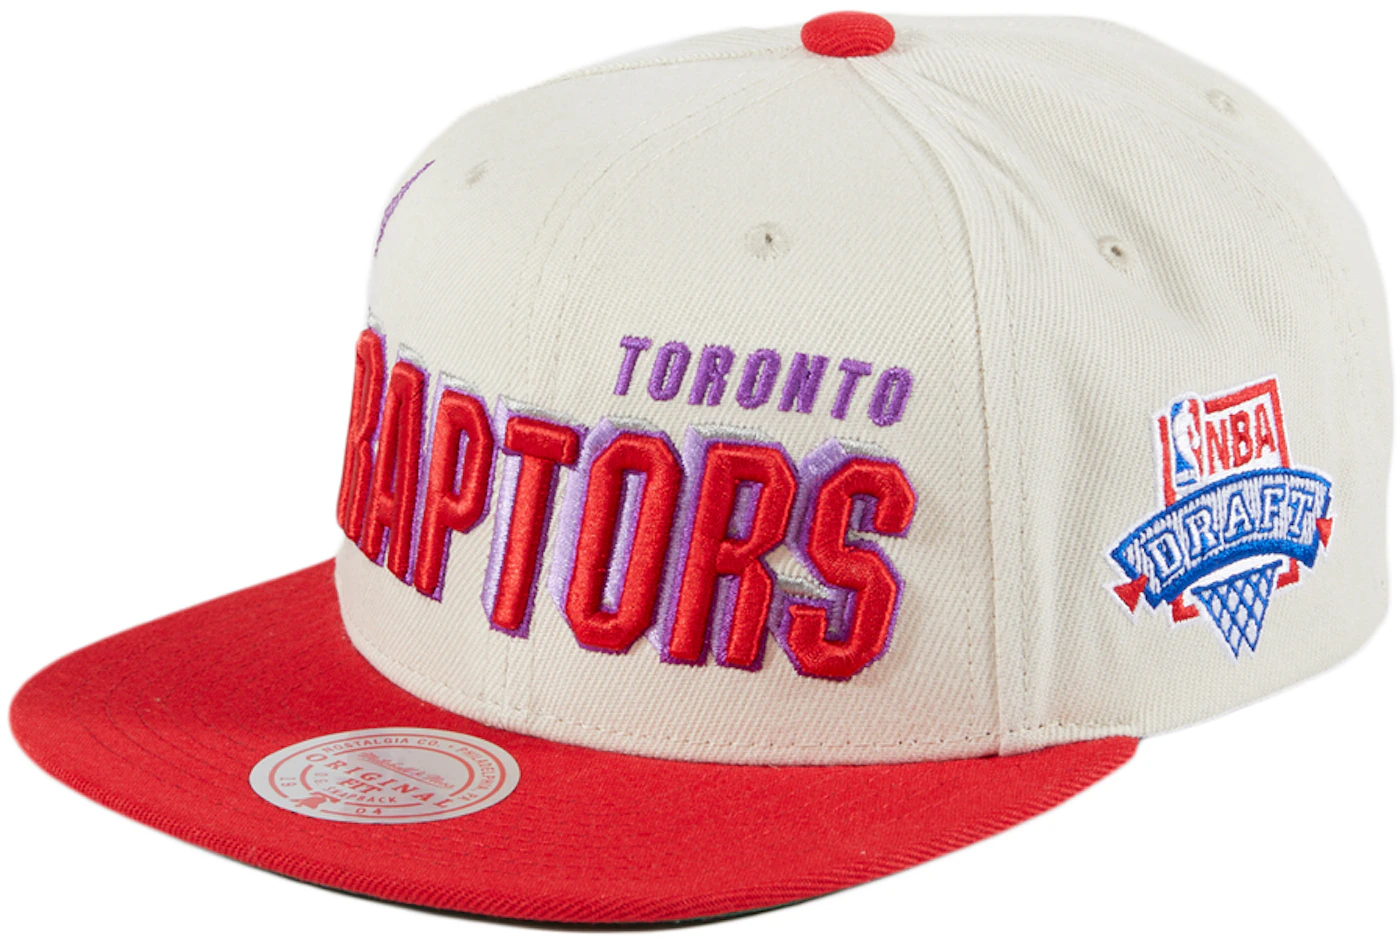 Mens Toronto Raptors Hats, Raptors Caps, Beanie, Snapbacks